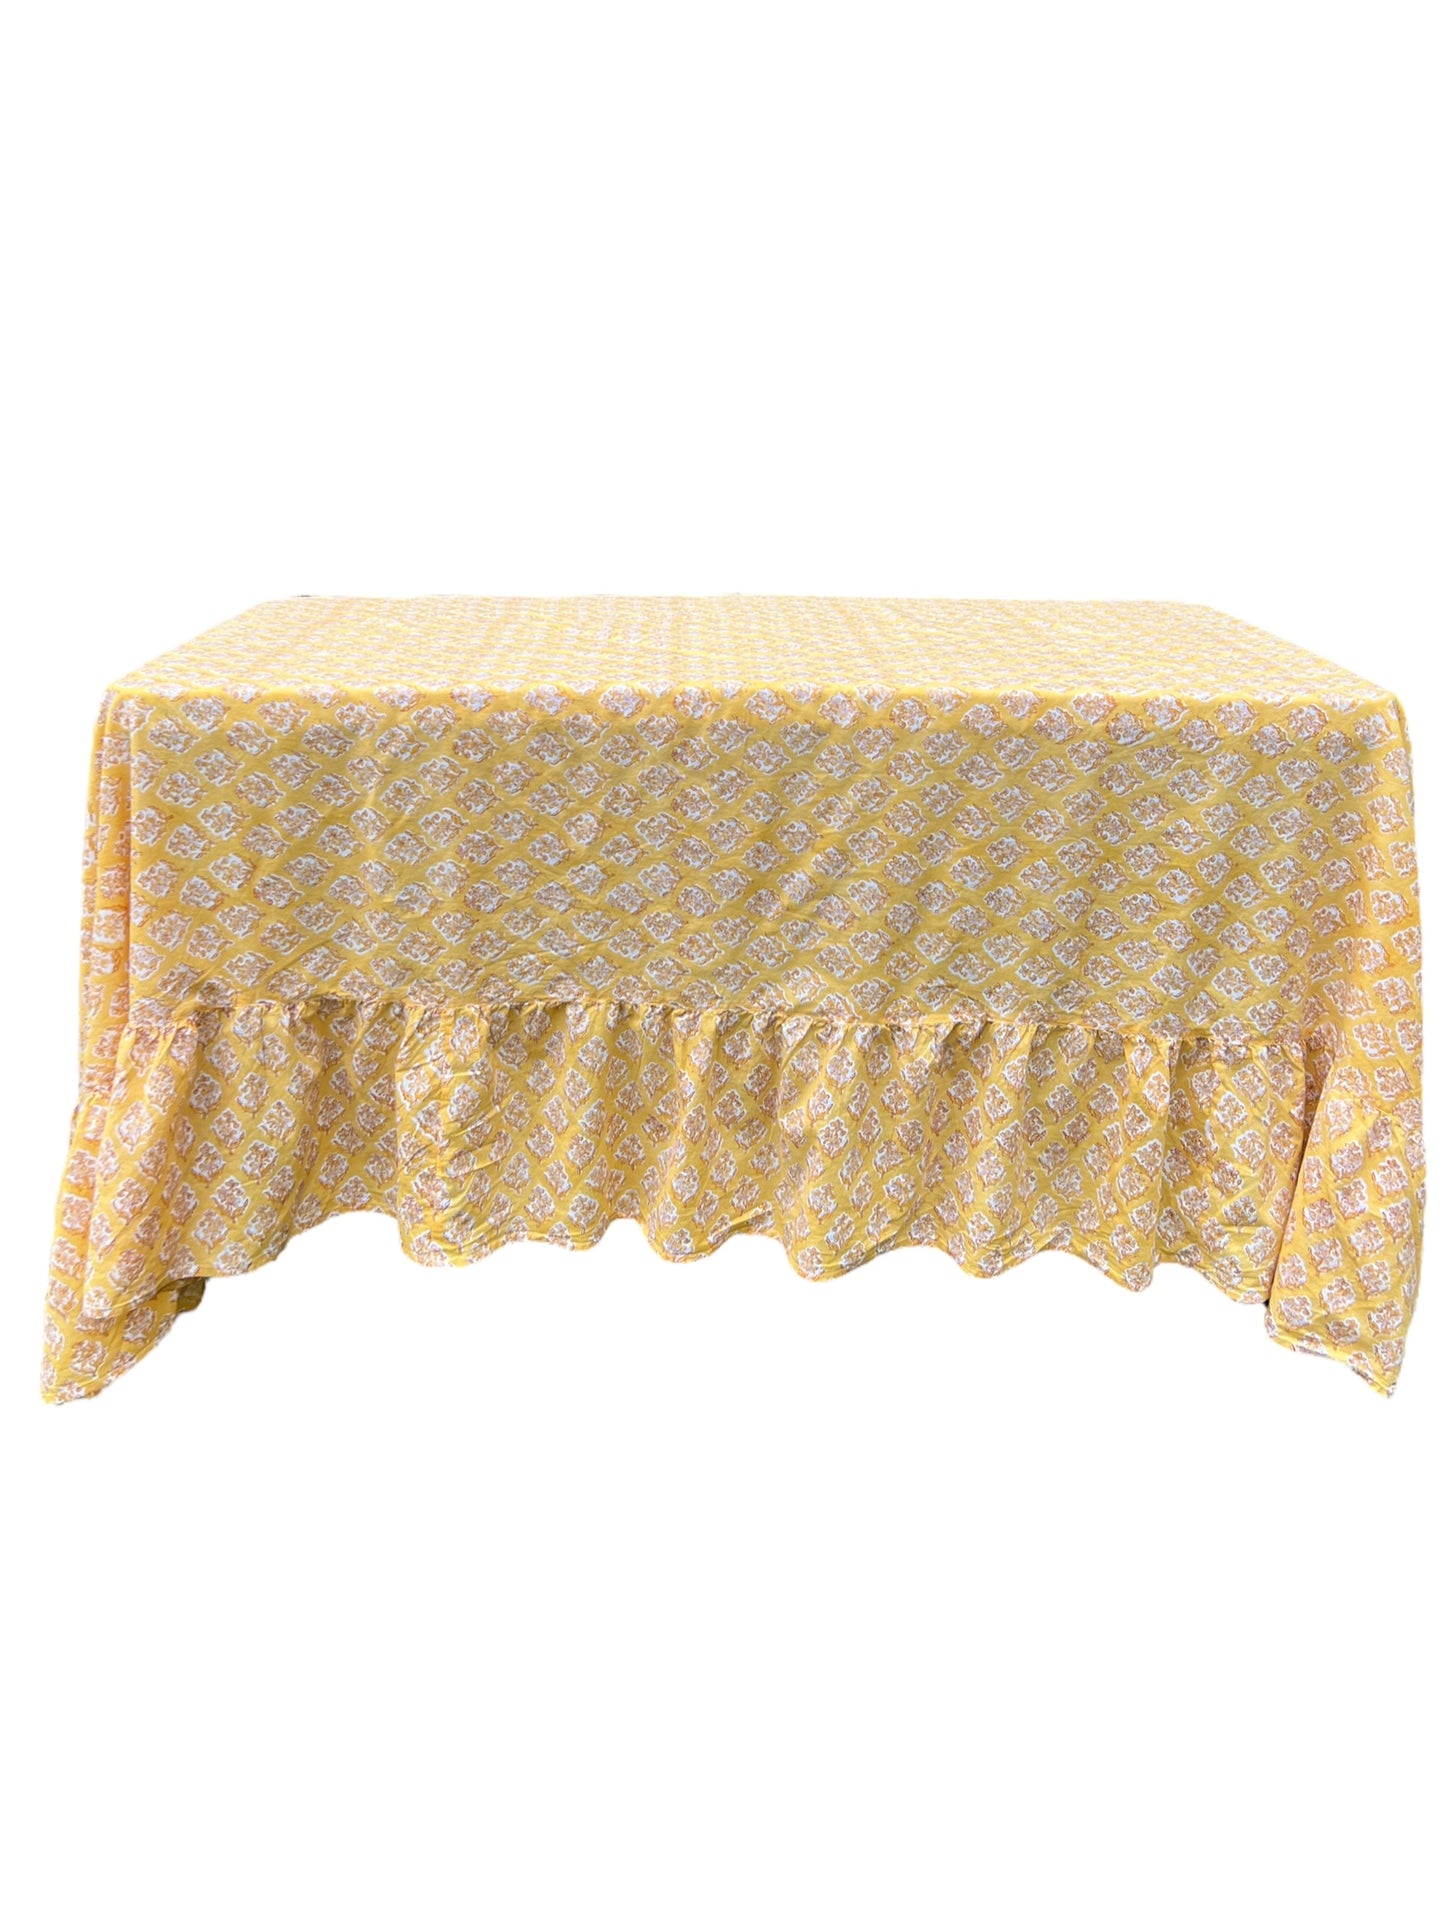 Yellow Buti Ruffle Table Linens